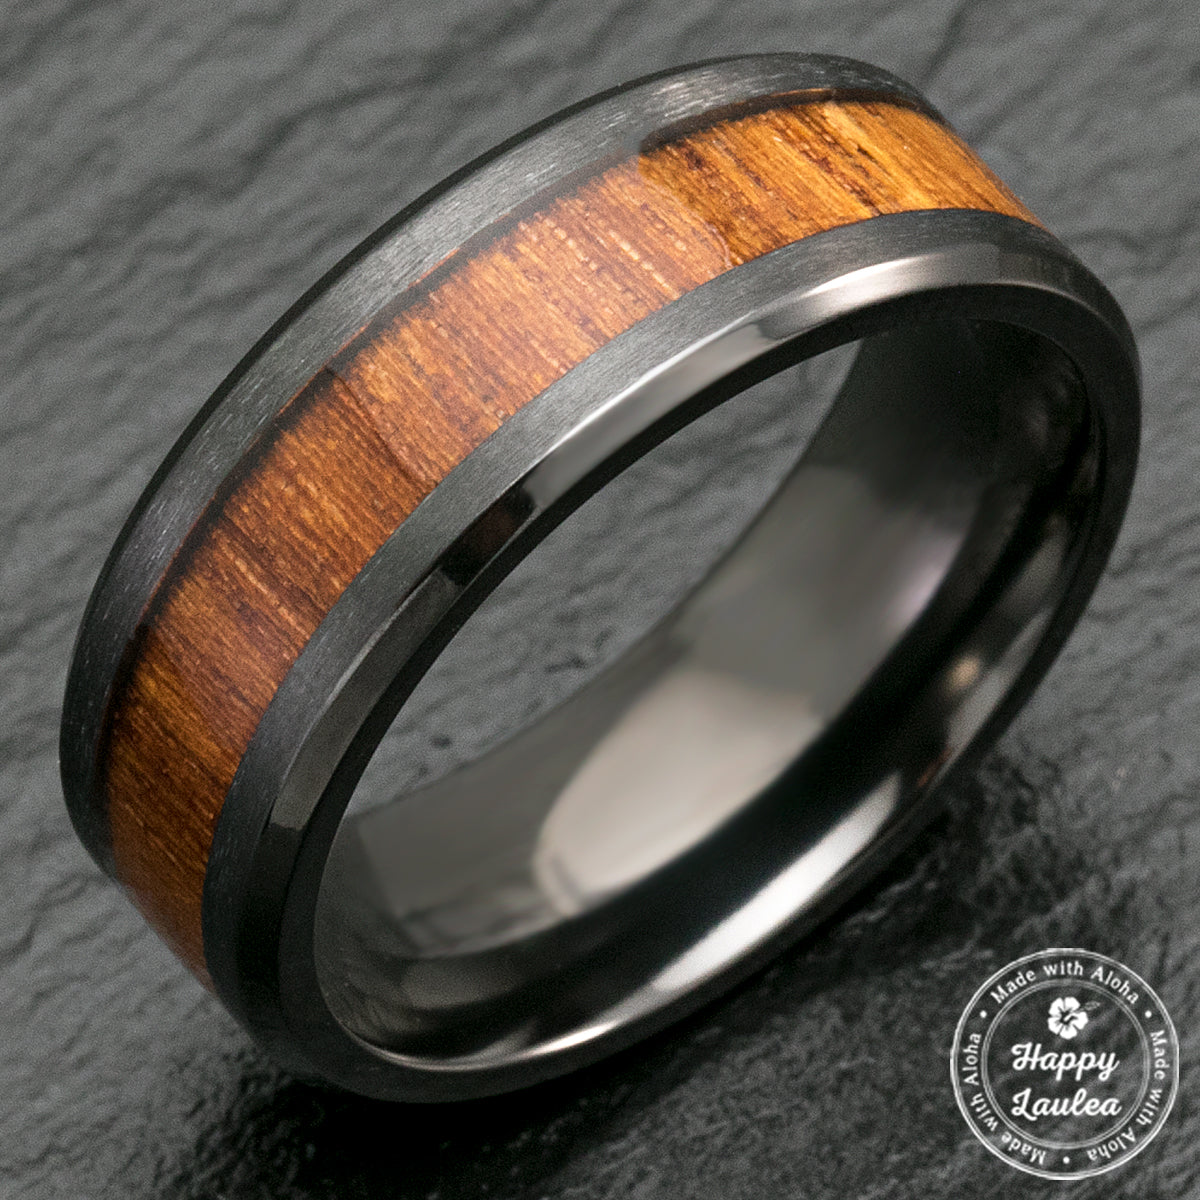 Black Zirconium Beveled Edge Ring with Hawaiian Koa Wood Inlay - 8mm, Flat Shaped, Comfort Fitment